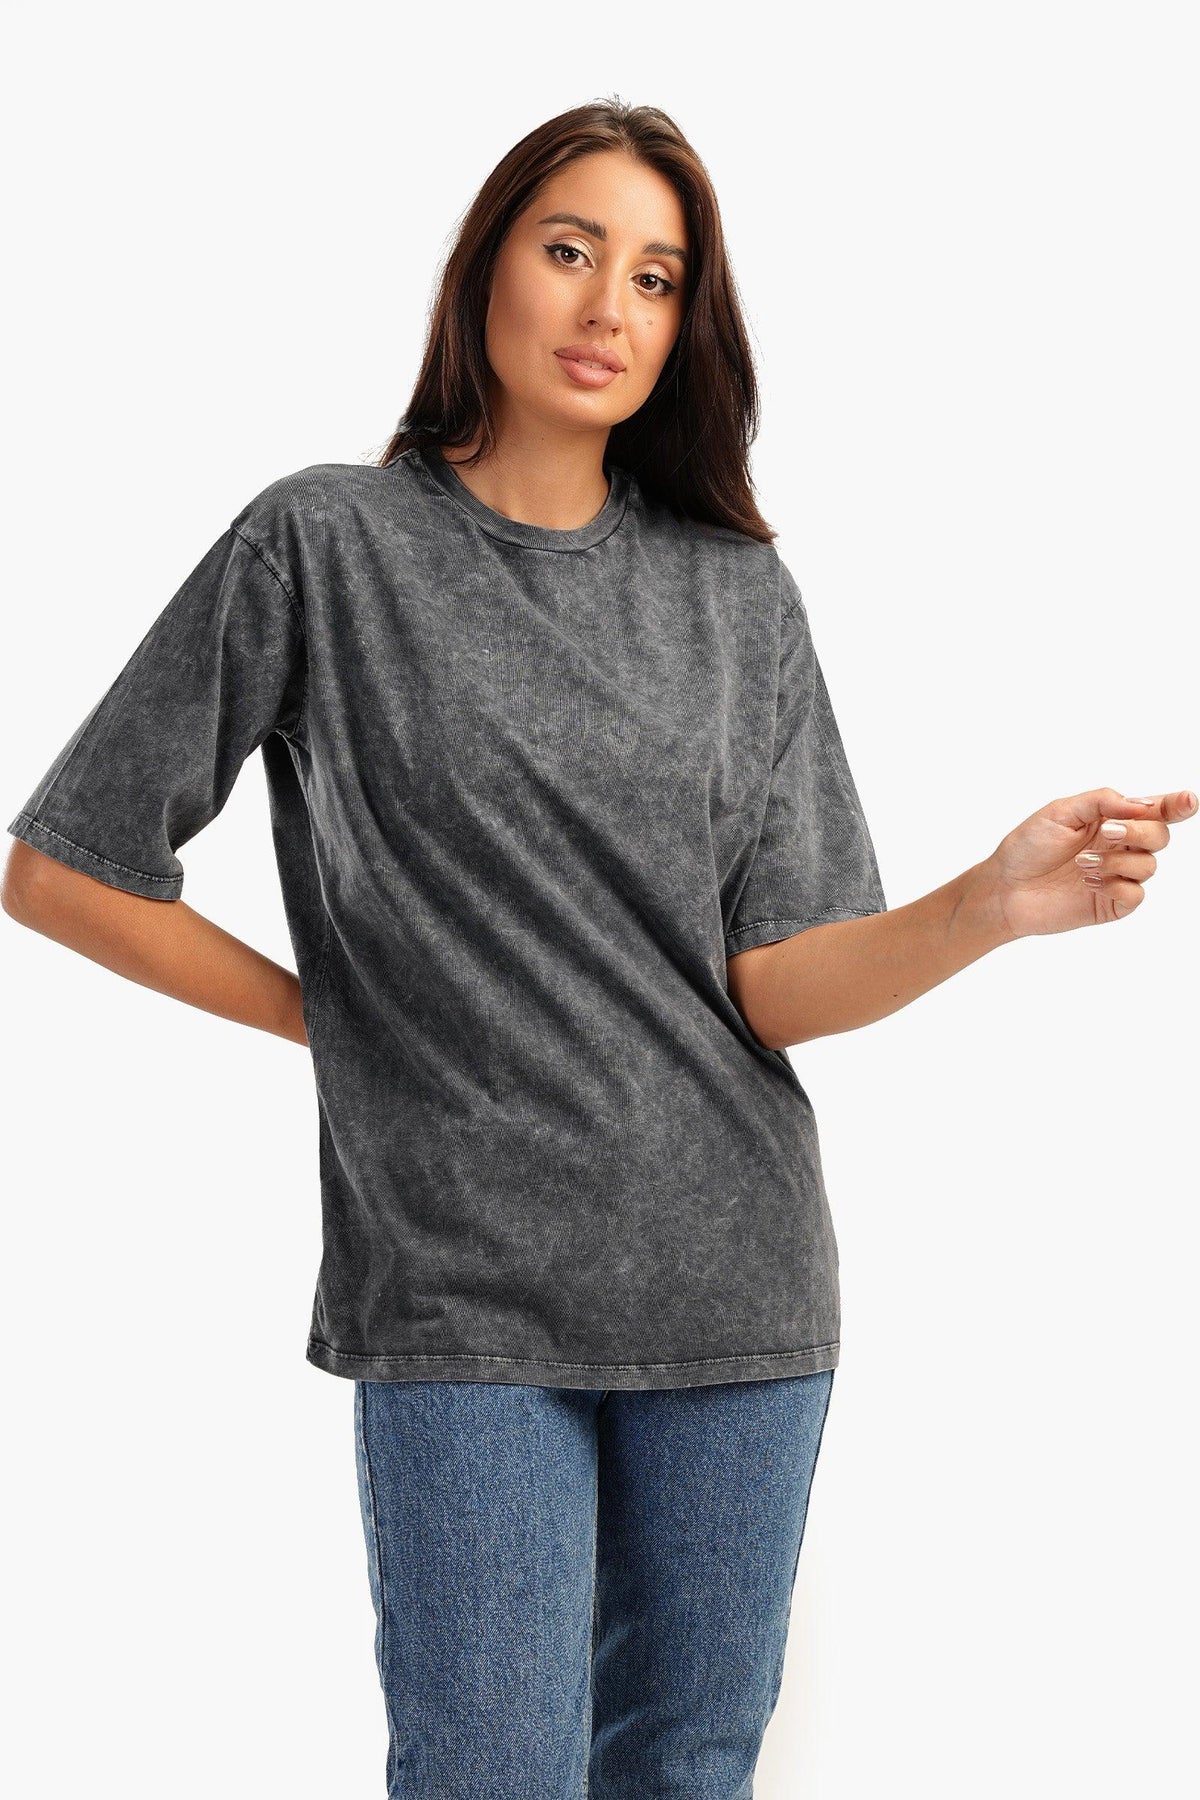 Heather Grey Cotton T-Shirt - Carina - كارينا